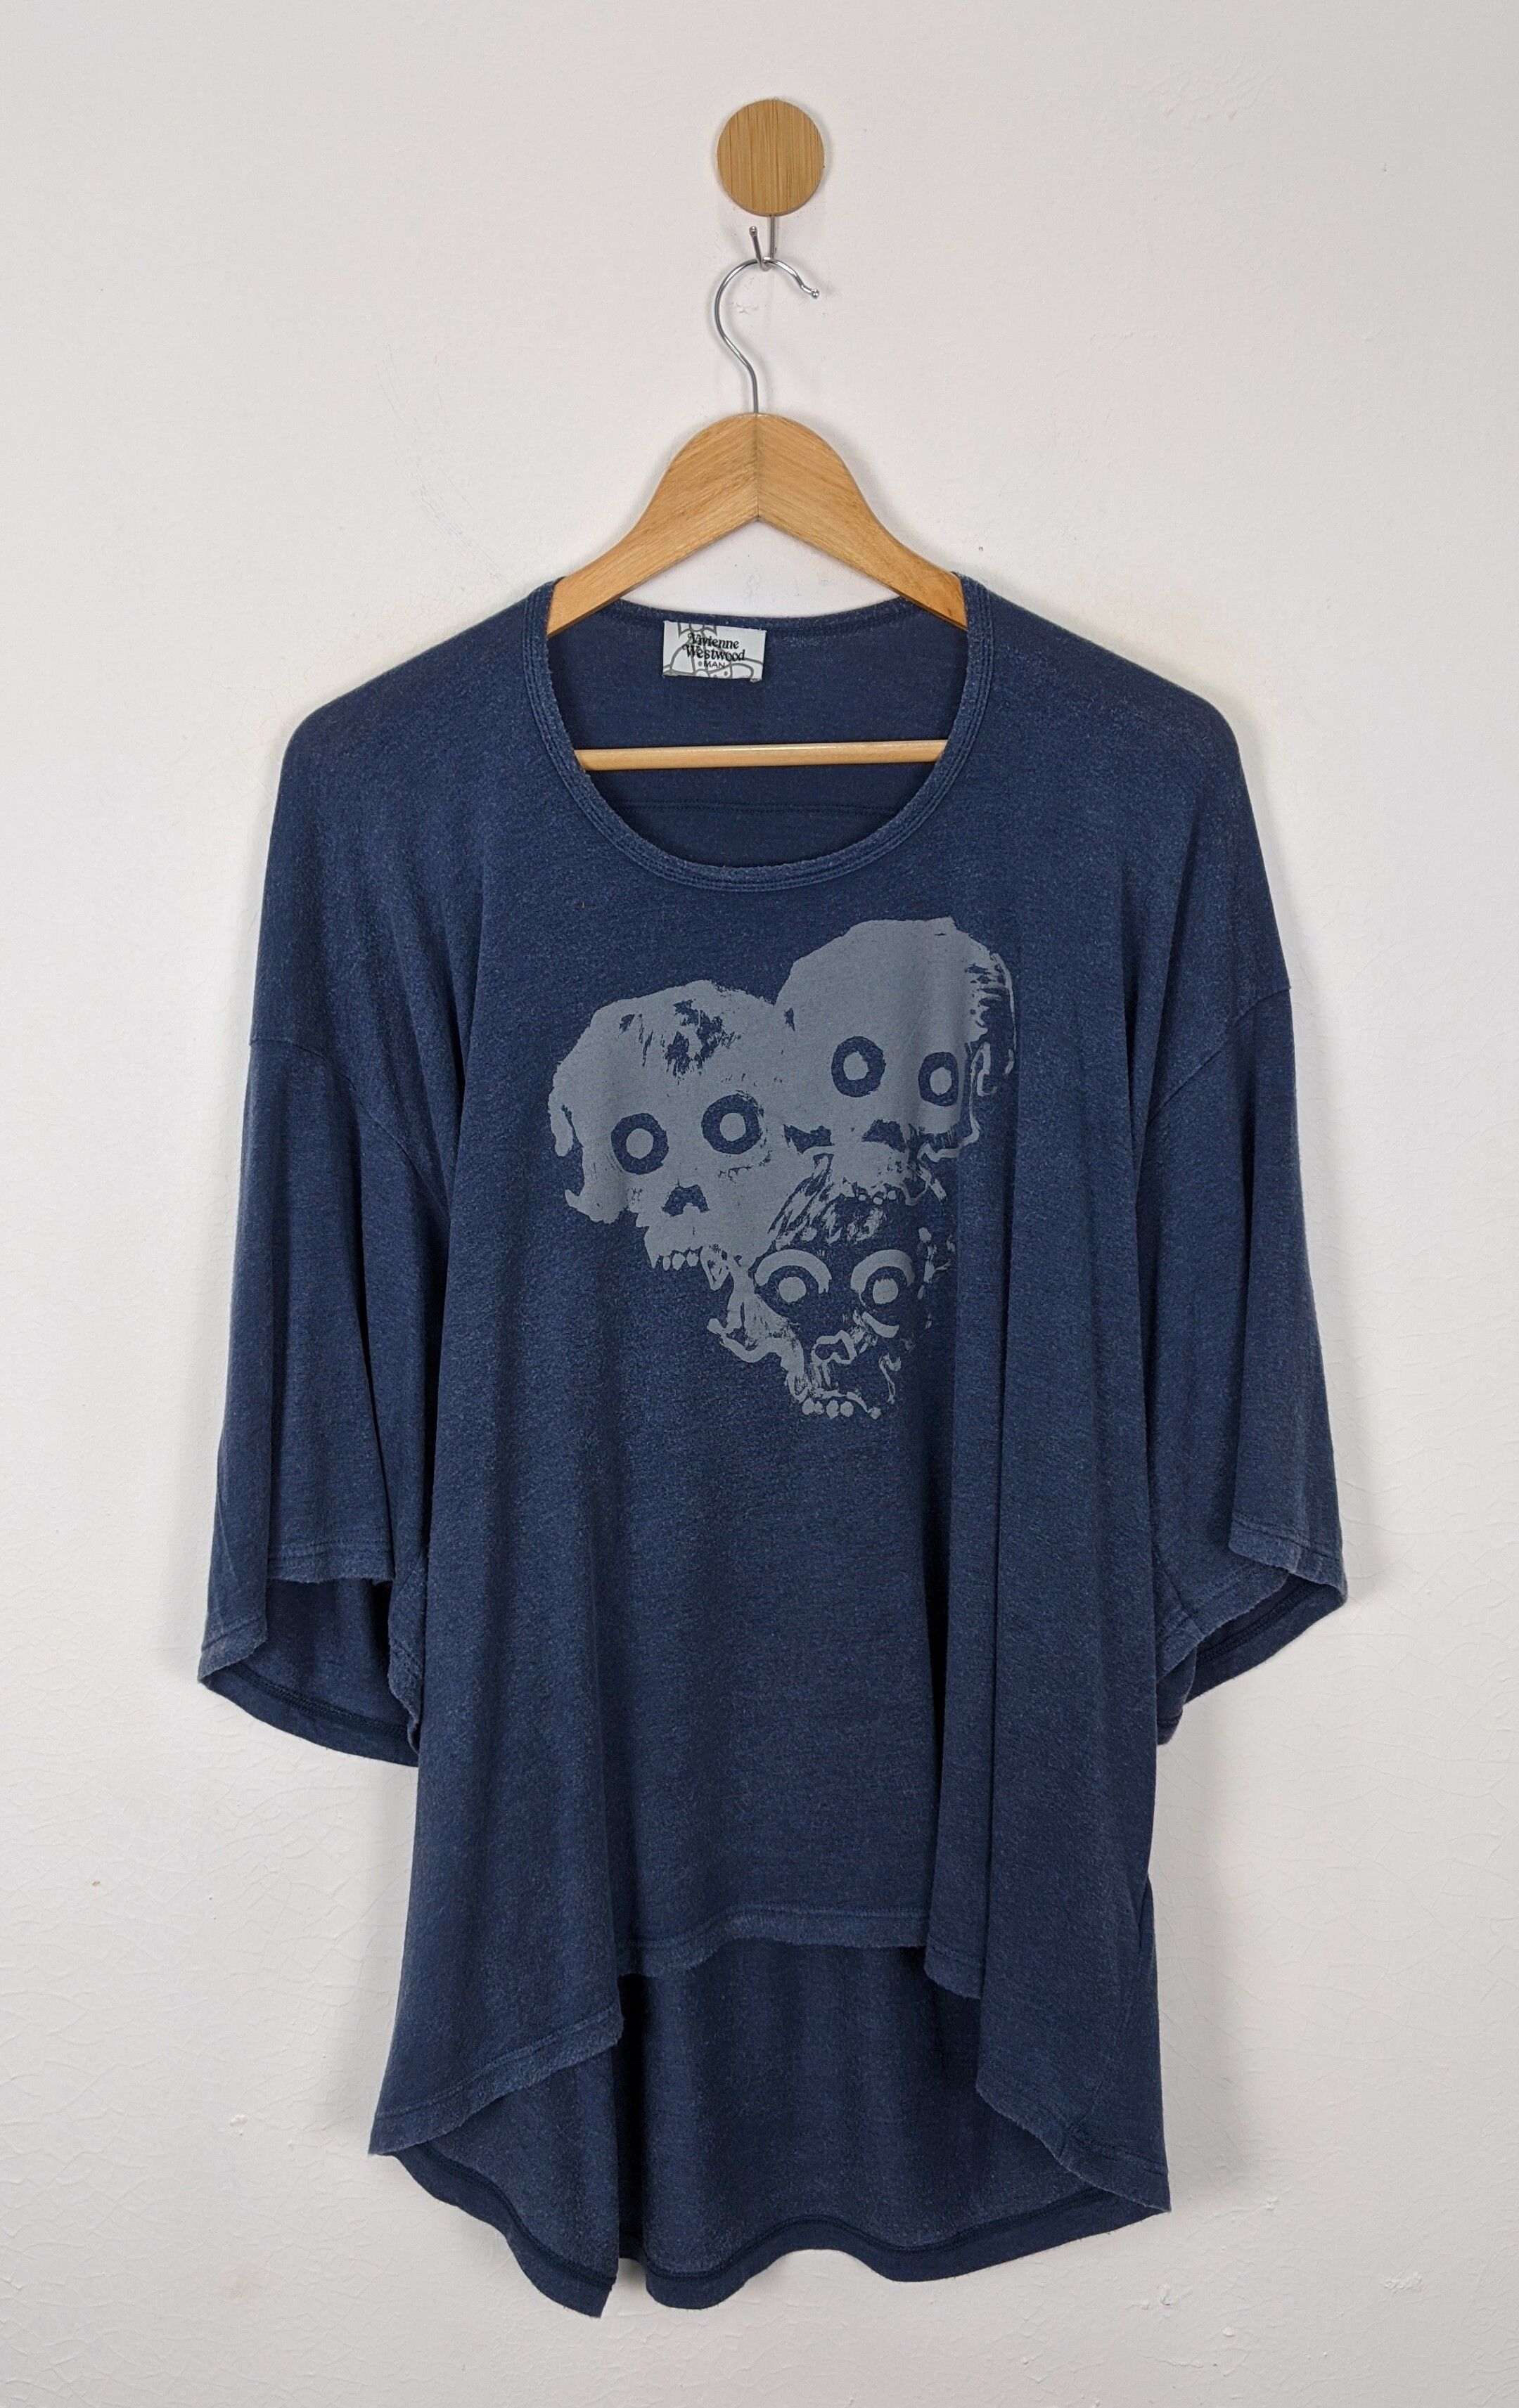 Vivienne Westwood Man Skull shirt - 1